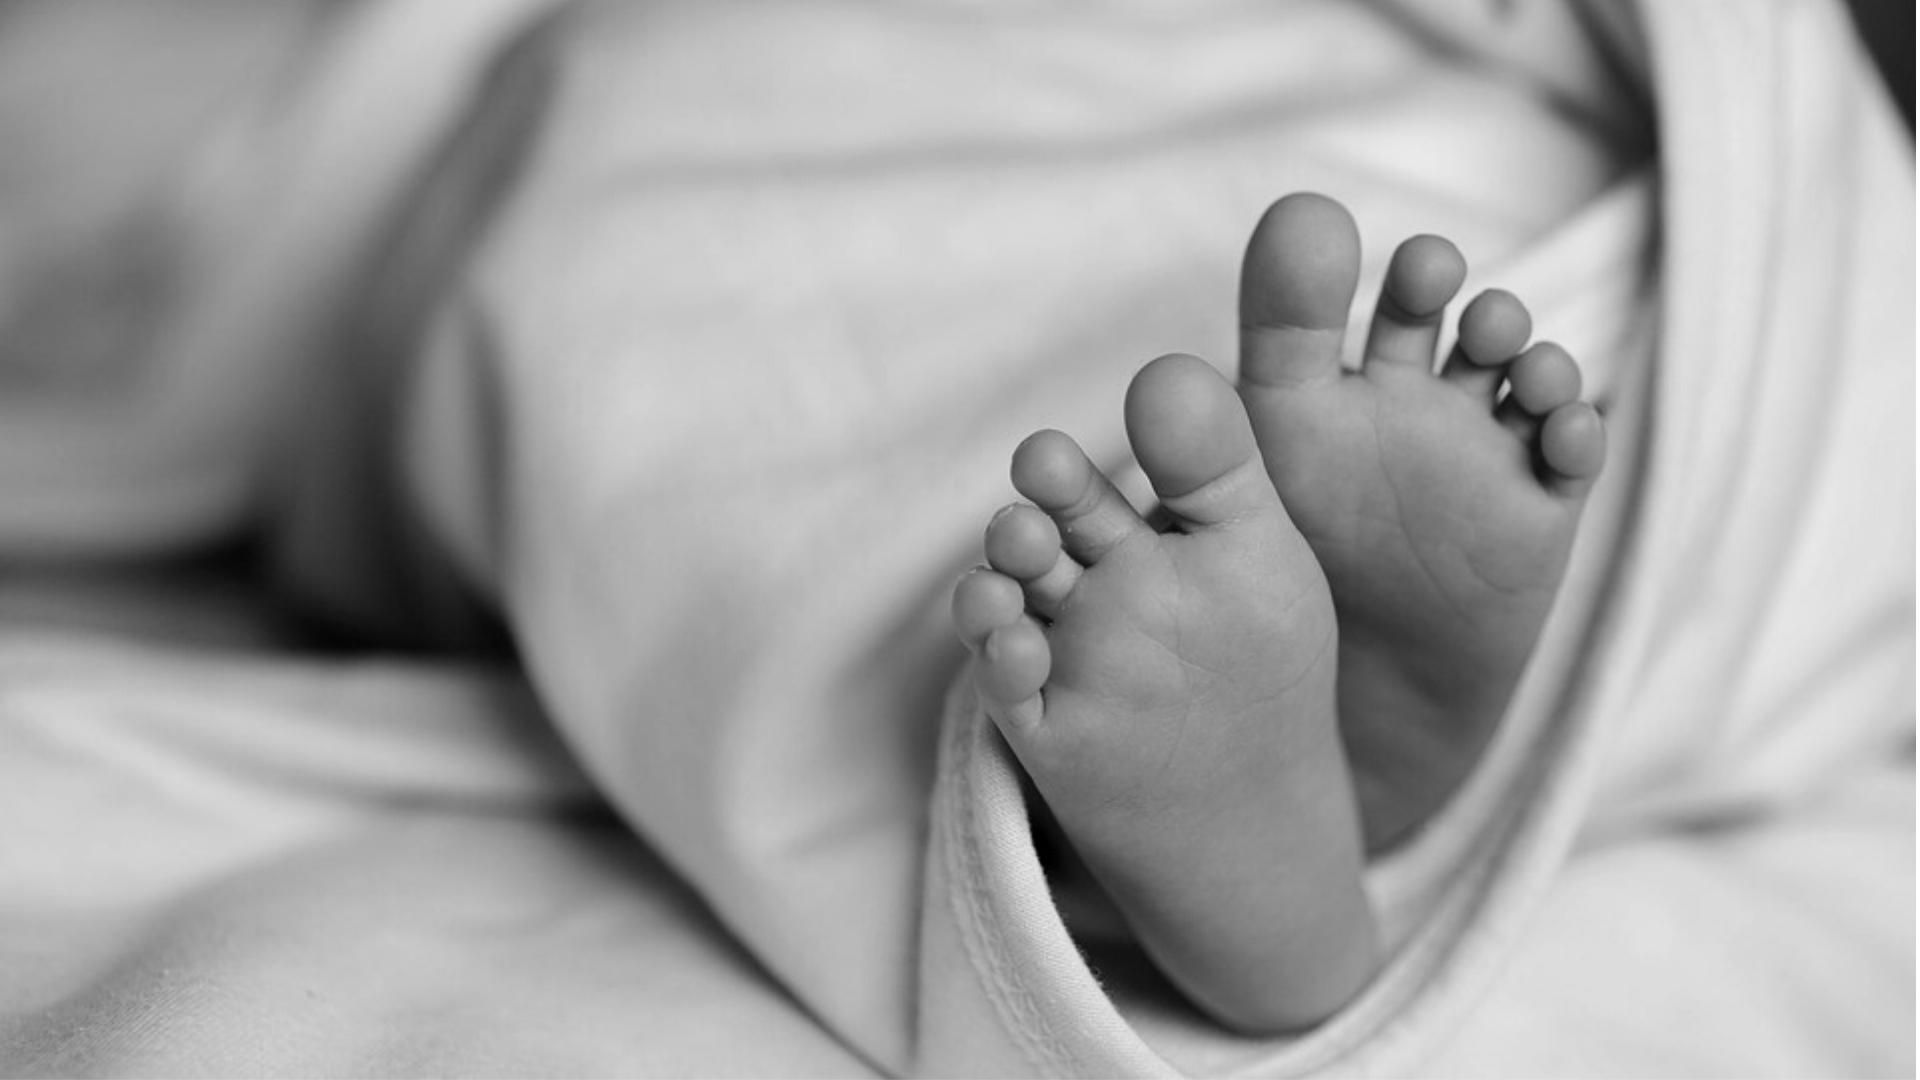 Muere bebé de 3 meses tras ser abusada. Imagen de referencia: Pixabay